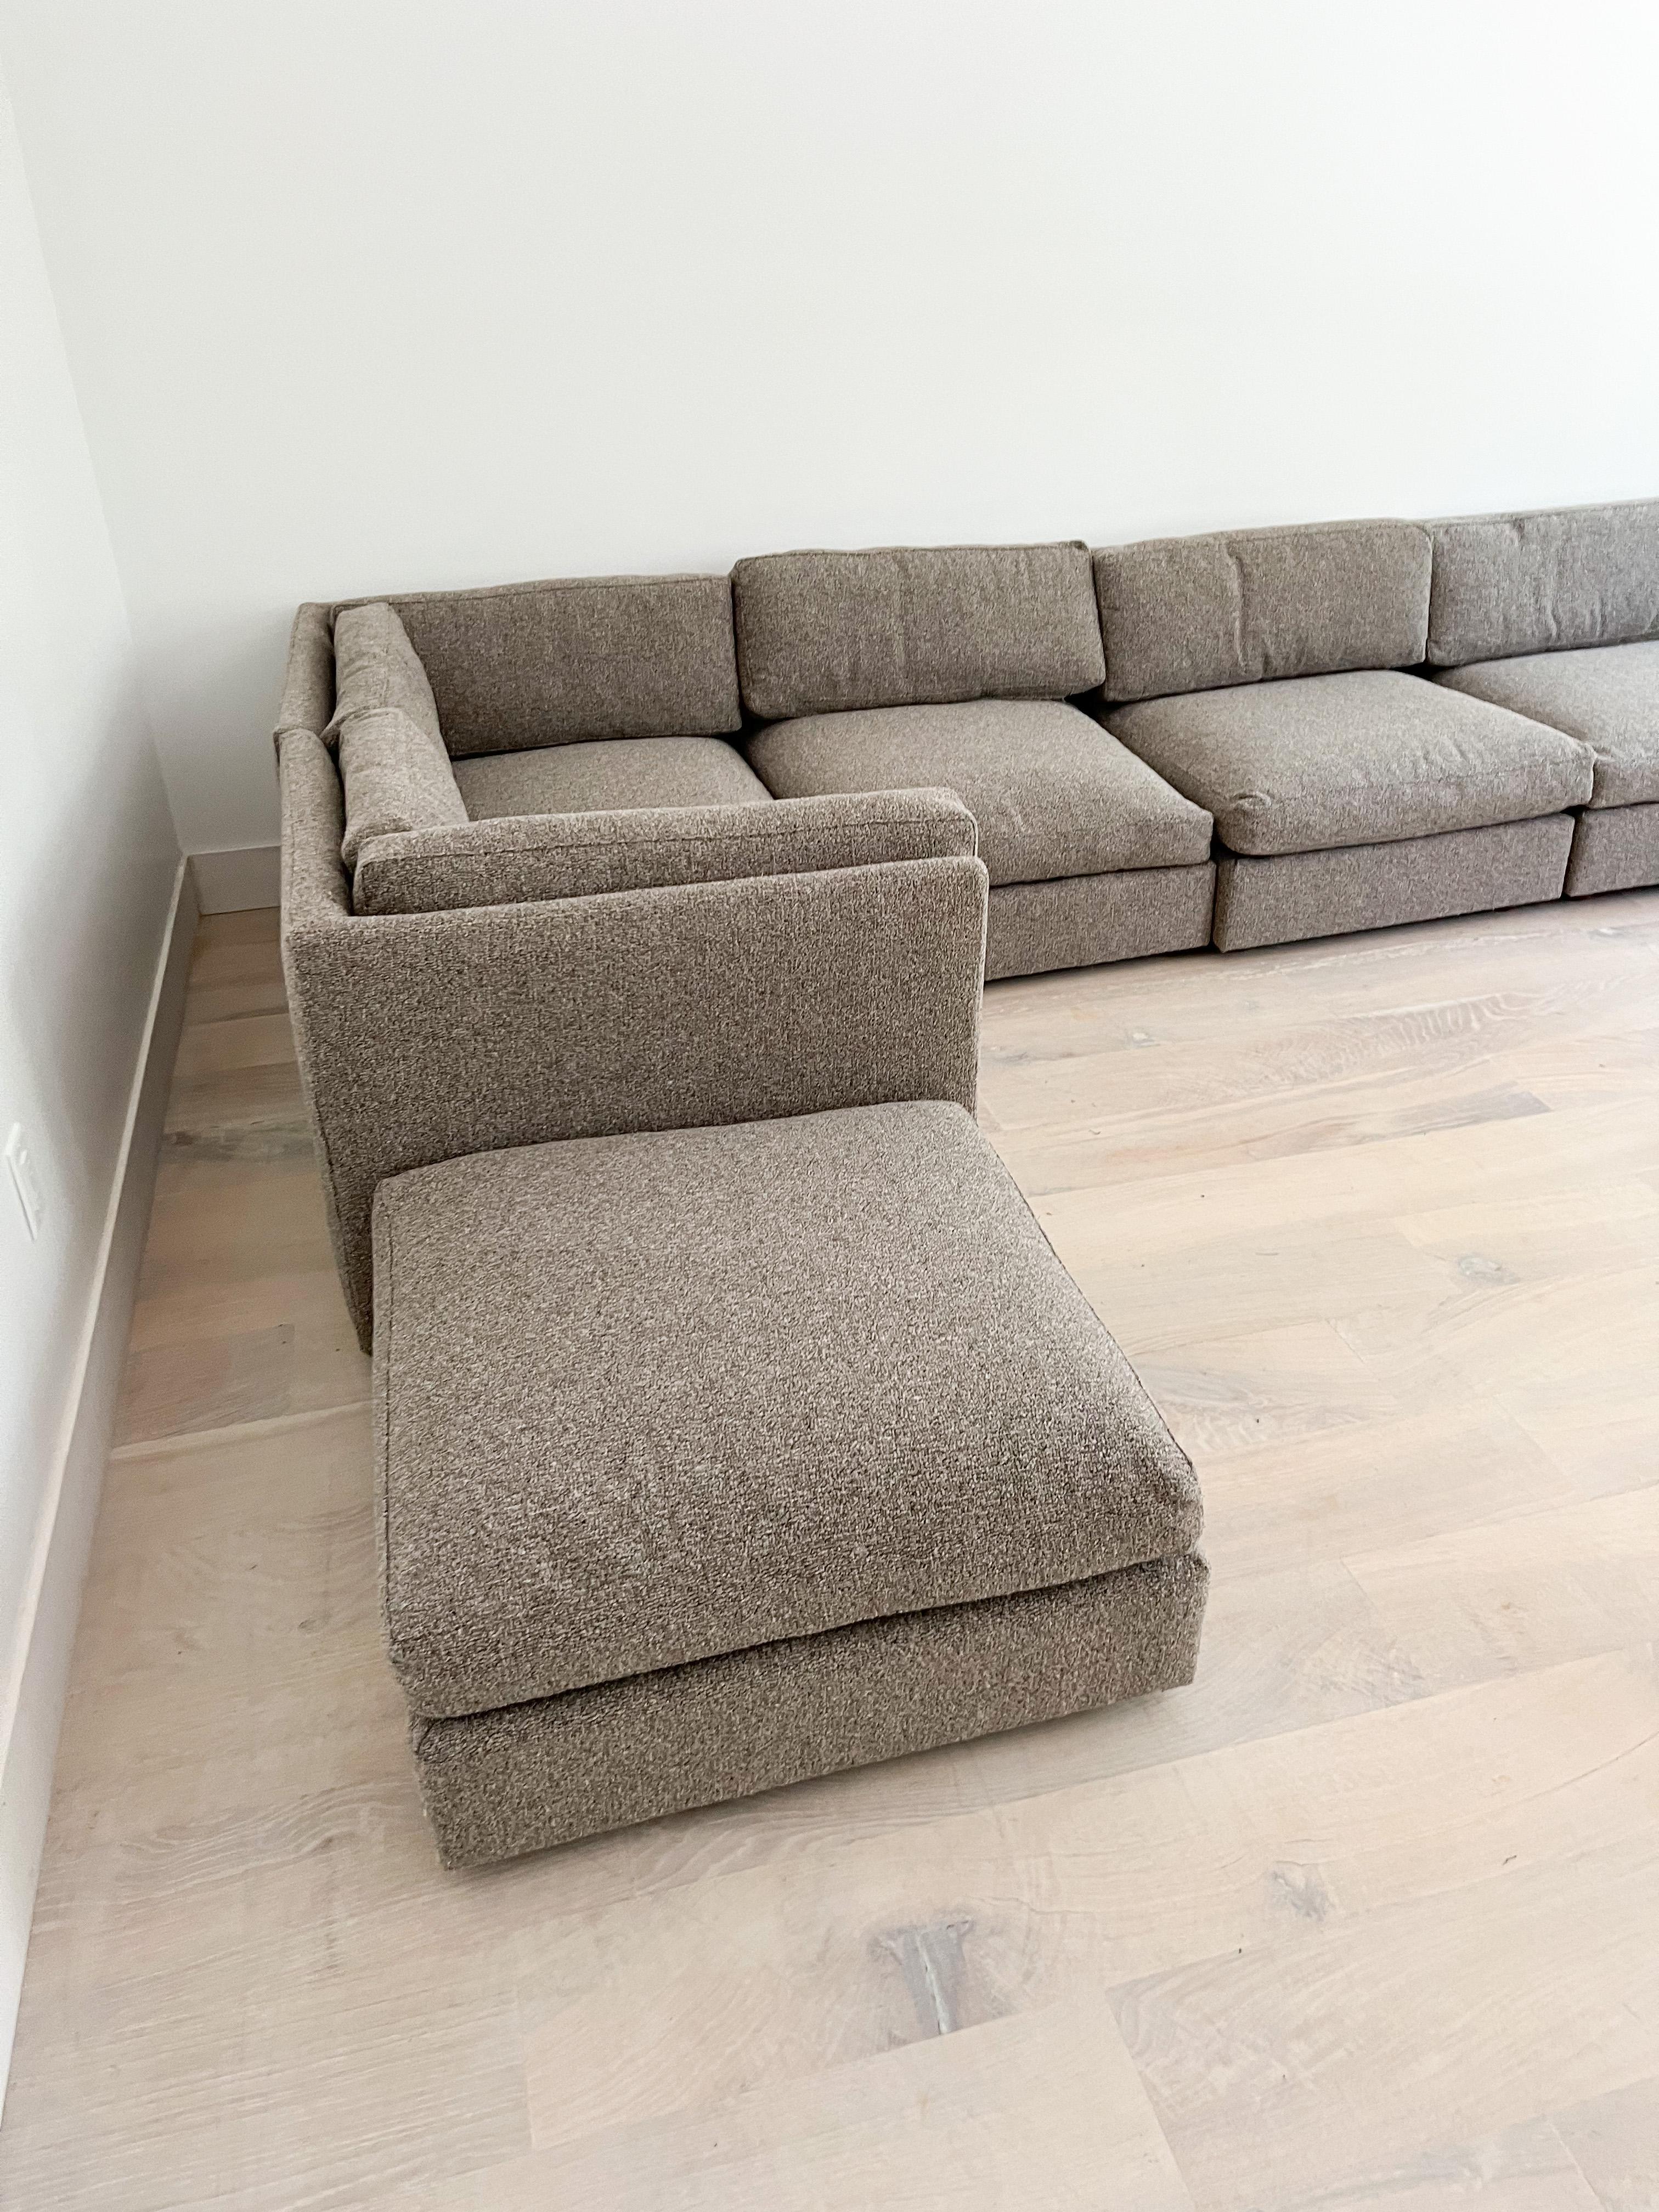 Milo Baughman Attributed 10 Piece Modular Sectional Sofa, New Upholstery 13